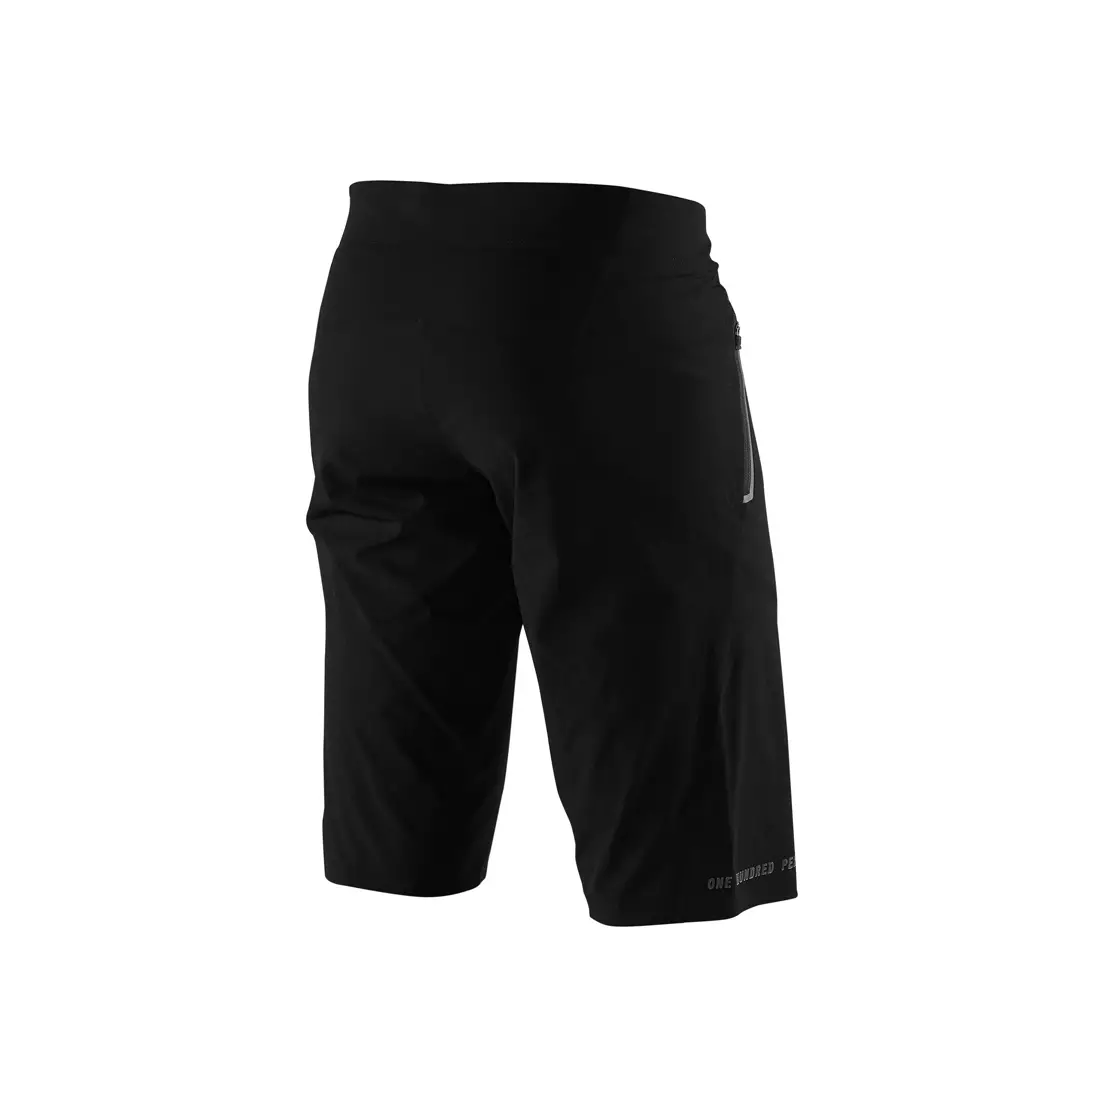 100% men's cycling shorts celium black STO-42210-001-38